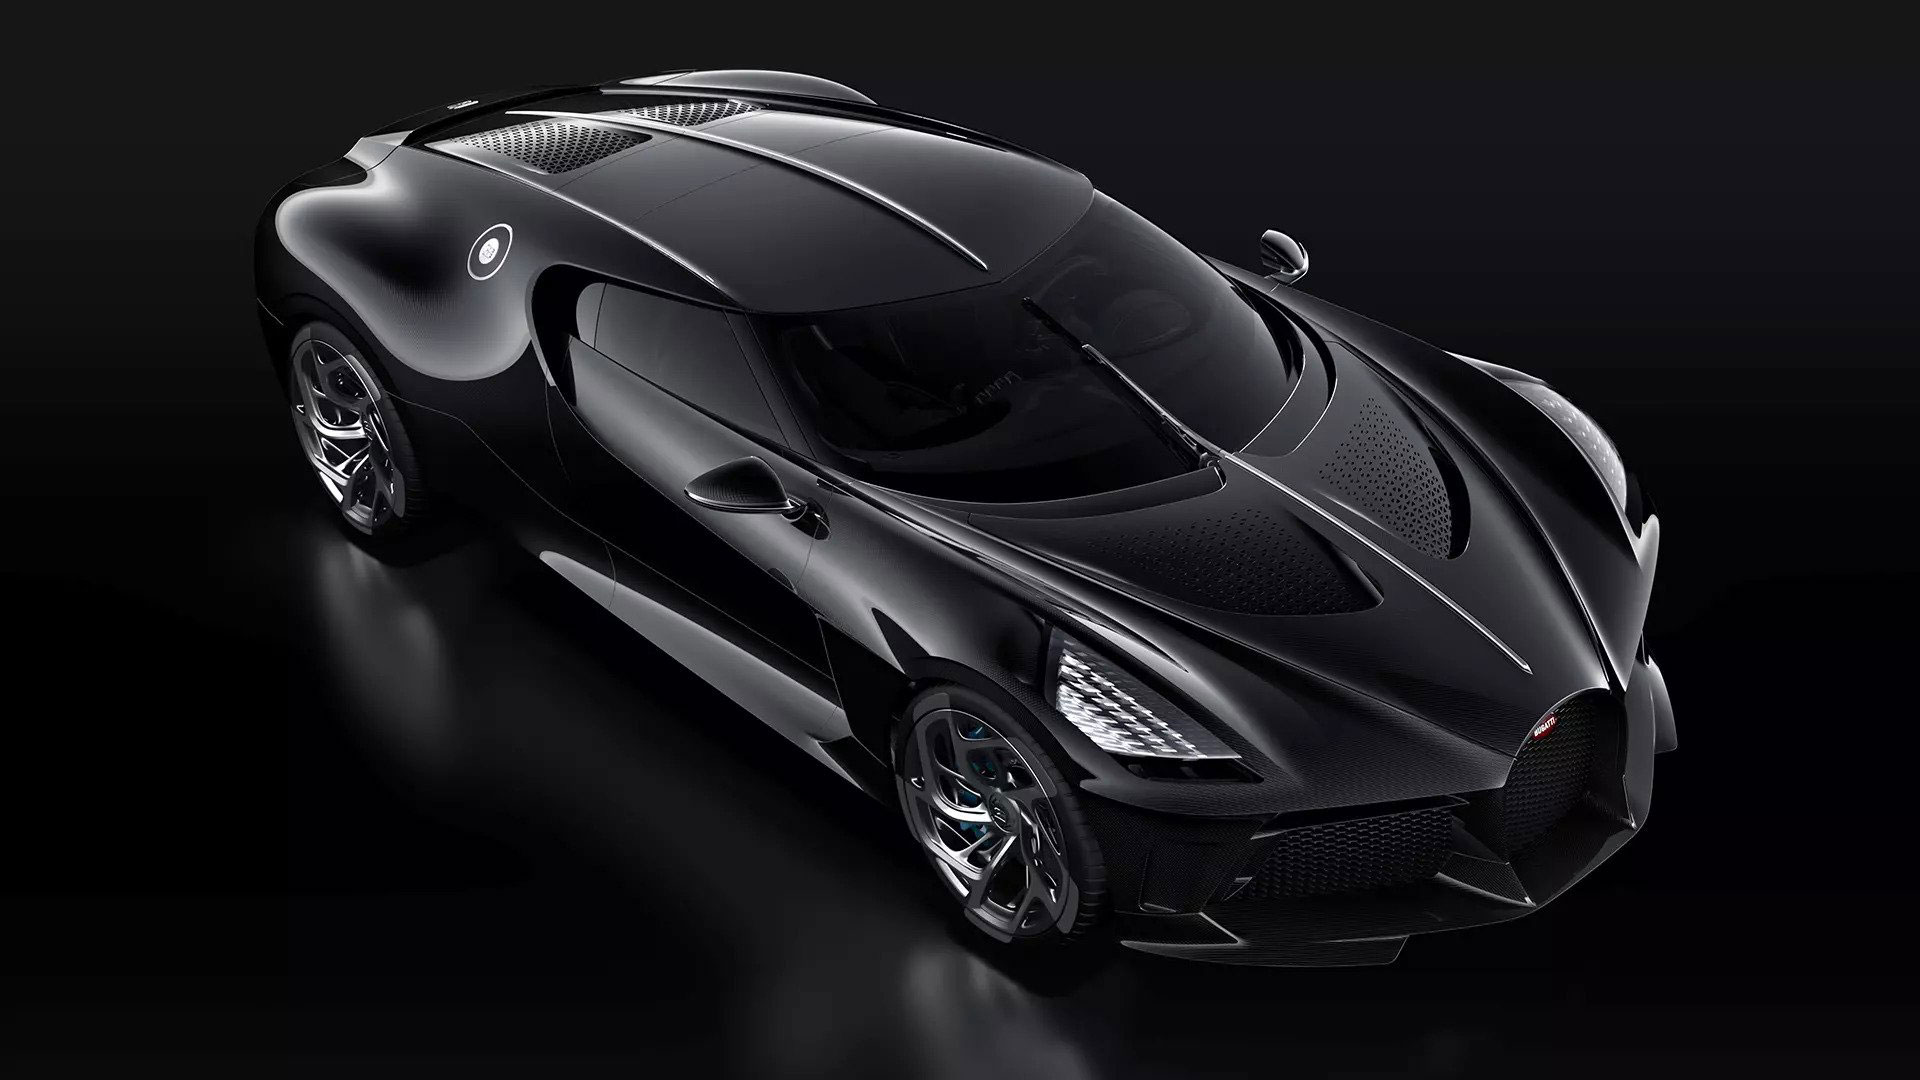 In pictures: Bugatti's $12.3 million supercar La Voiture Noire ...